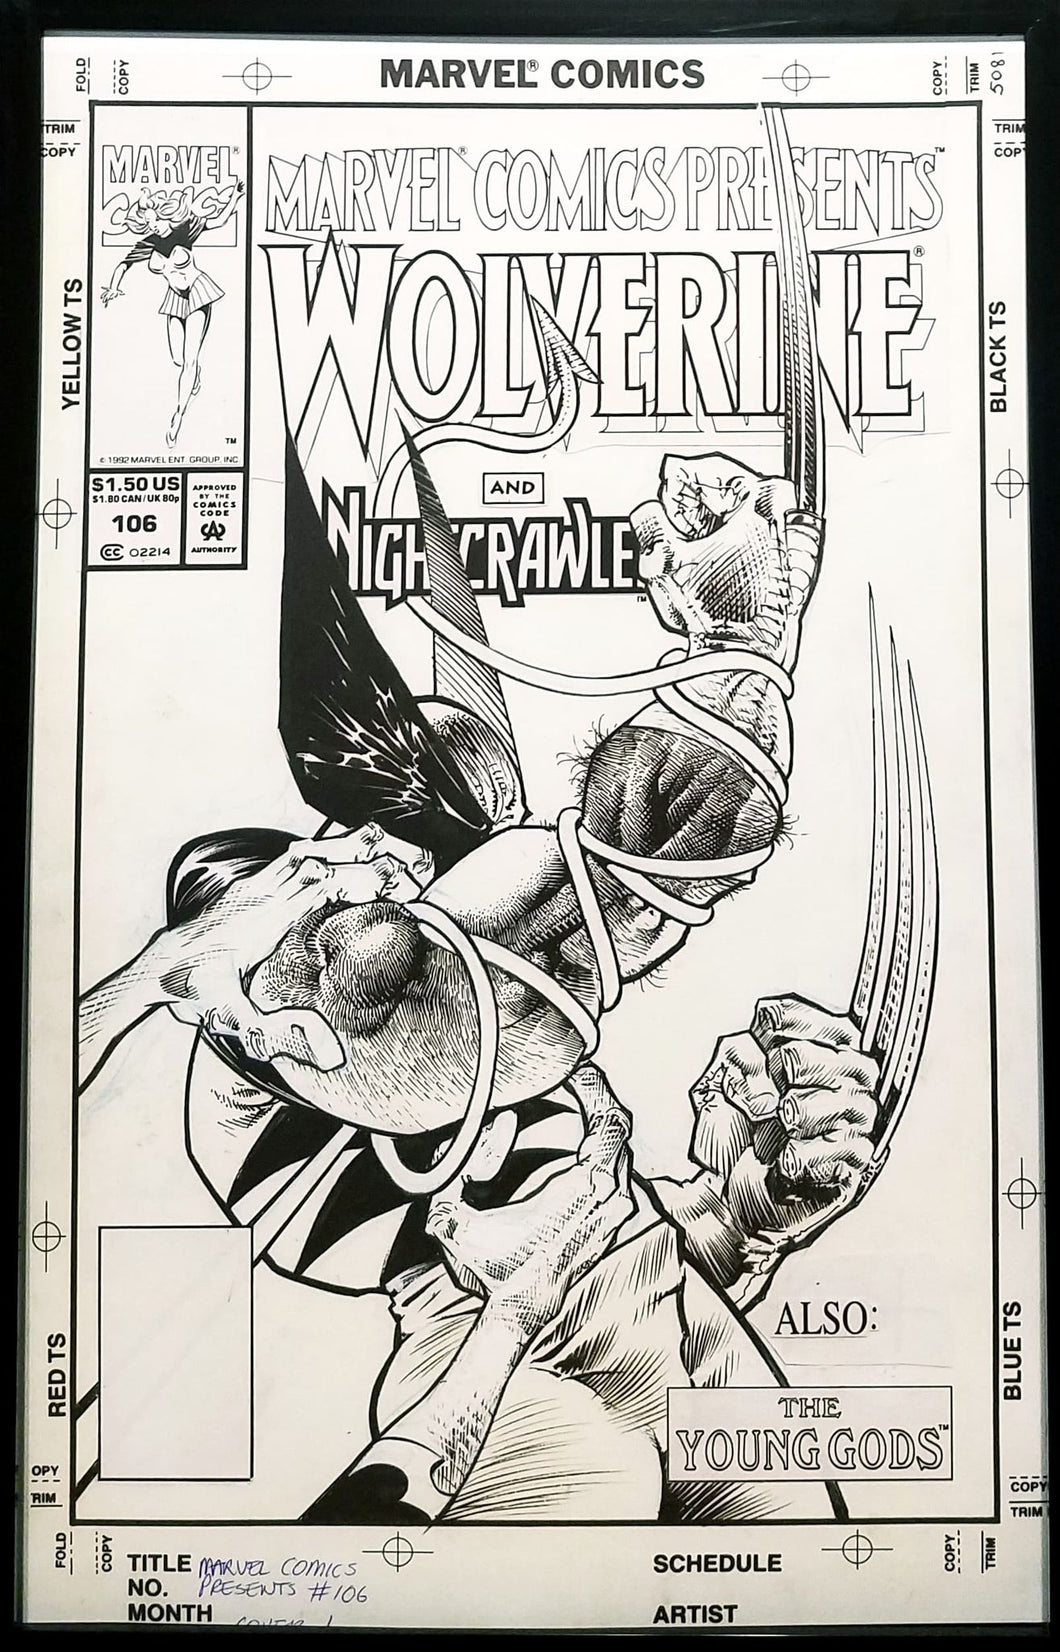 Marvel Comics Presents Wolverine #106 Sam Kieth 11x17 FRAMED Original Art Poster